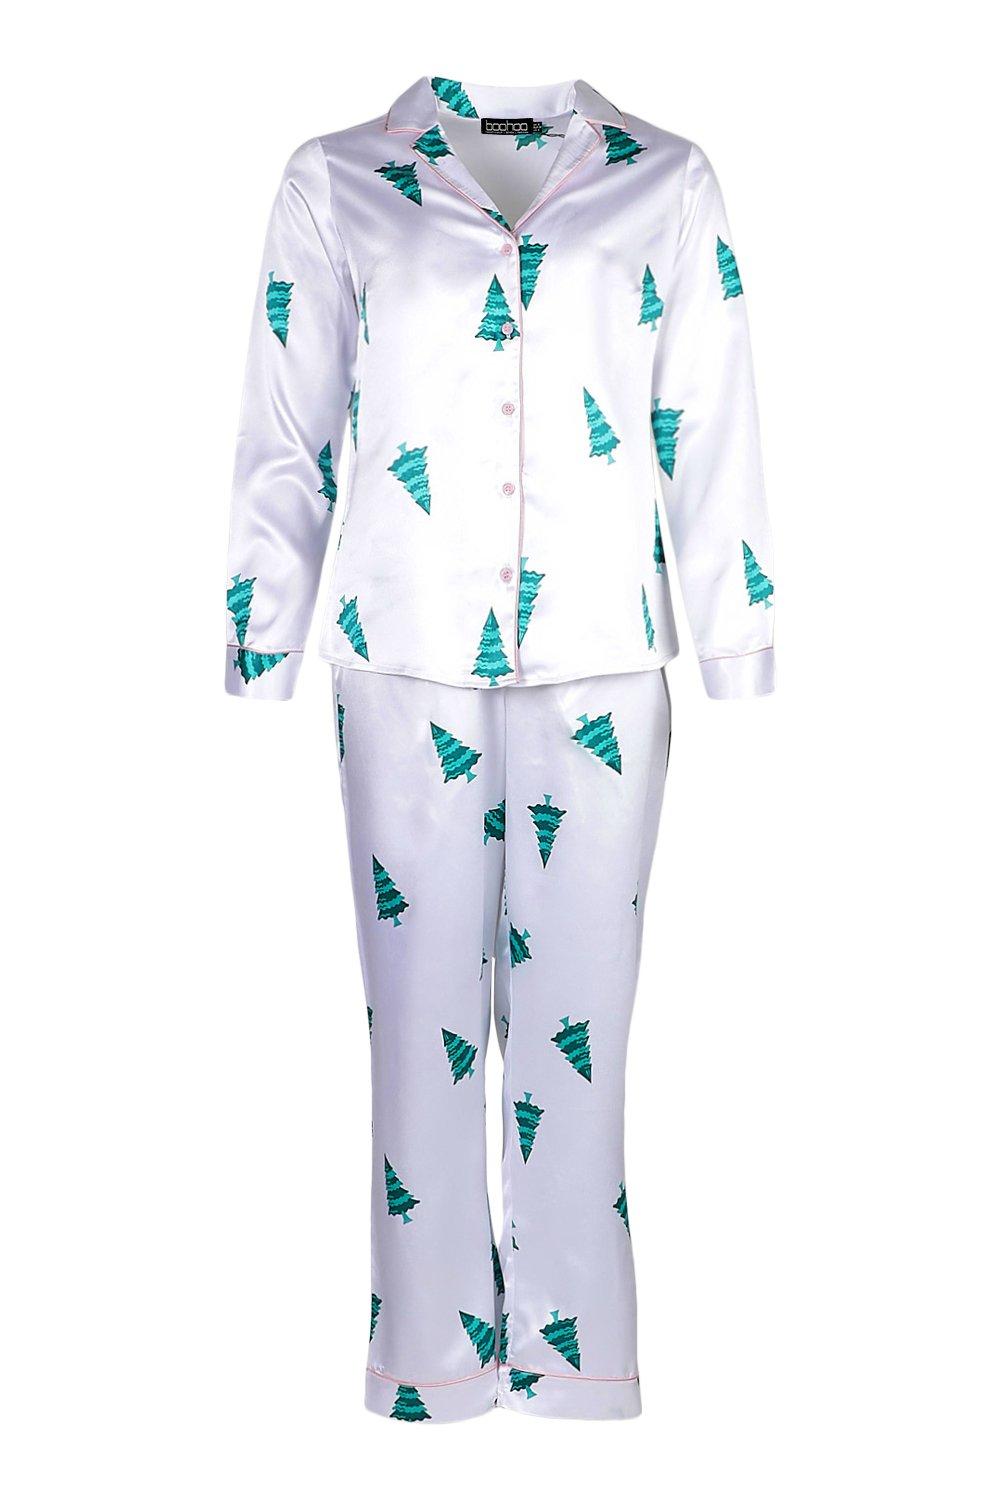 Satin 3 Pc Shirt Pants and Scrunchie Pajama Set